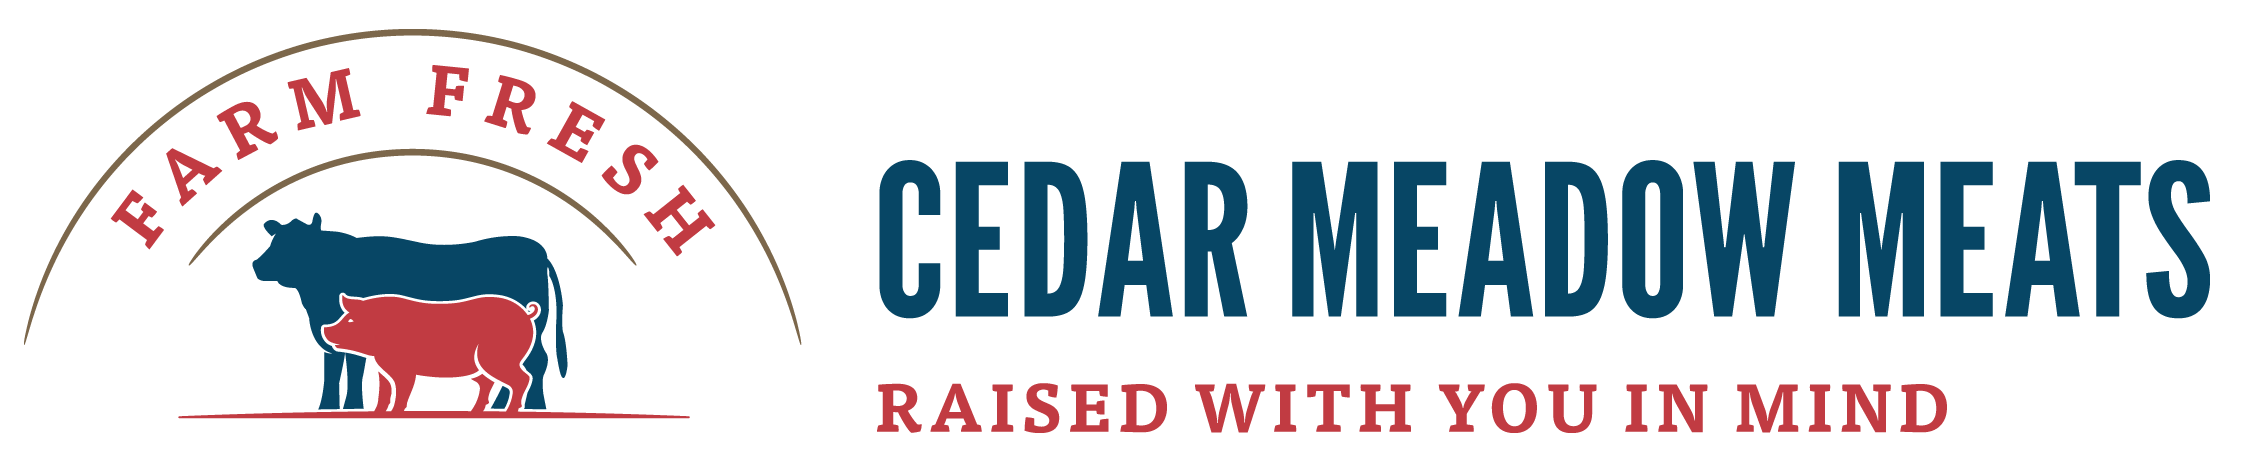 Cedar Meadow Meats Logo advertising farm fresh beef and pork.